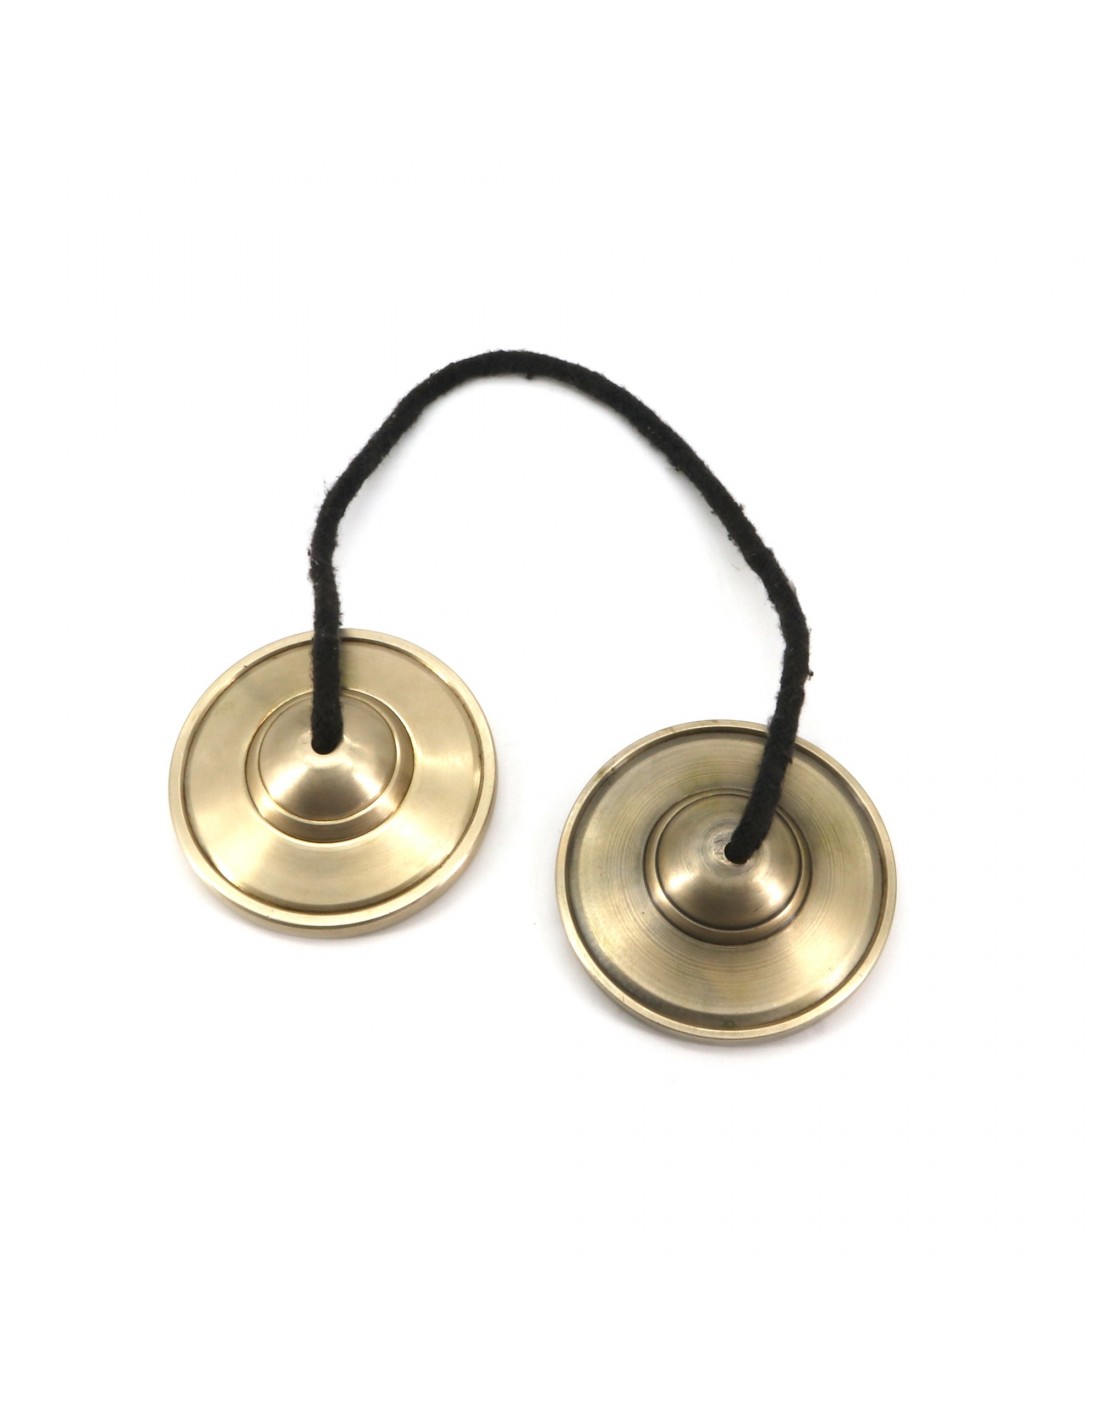  FULTAC Tibetan Bells, Size S, Approx. 2.6 x 2.6 x 4.7 inches  (6.6 x 6.6 x 12 cm) : Home & Kitchen